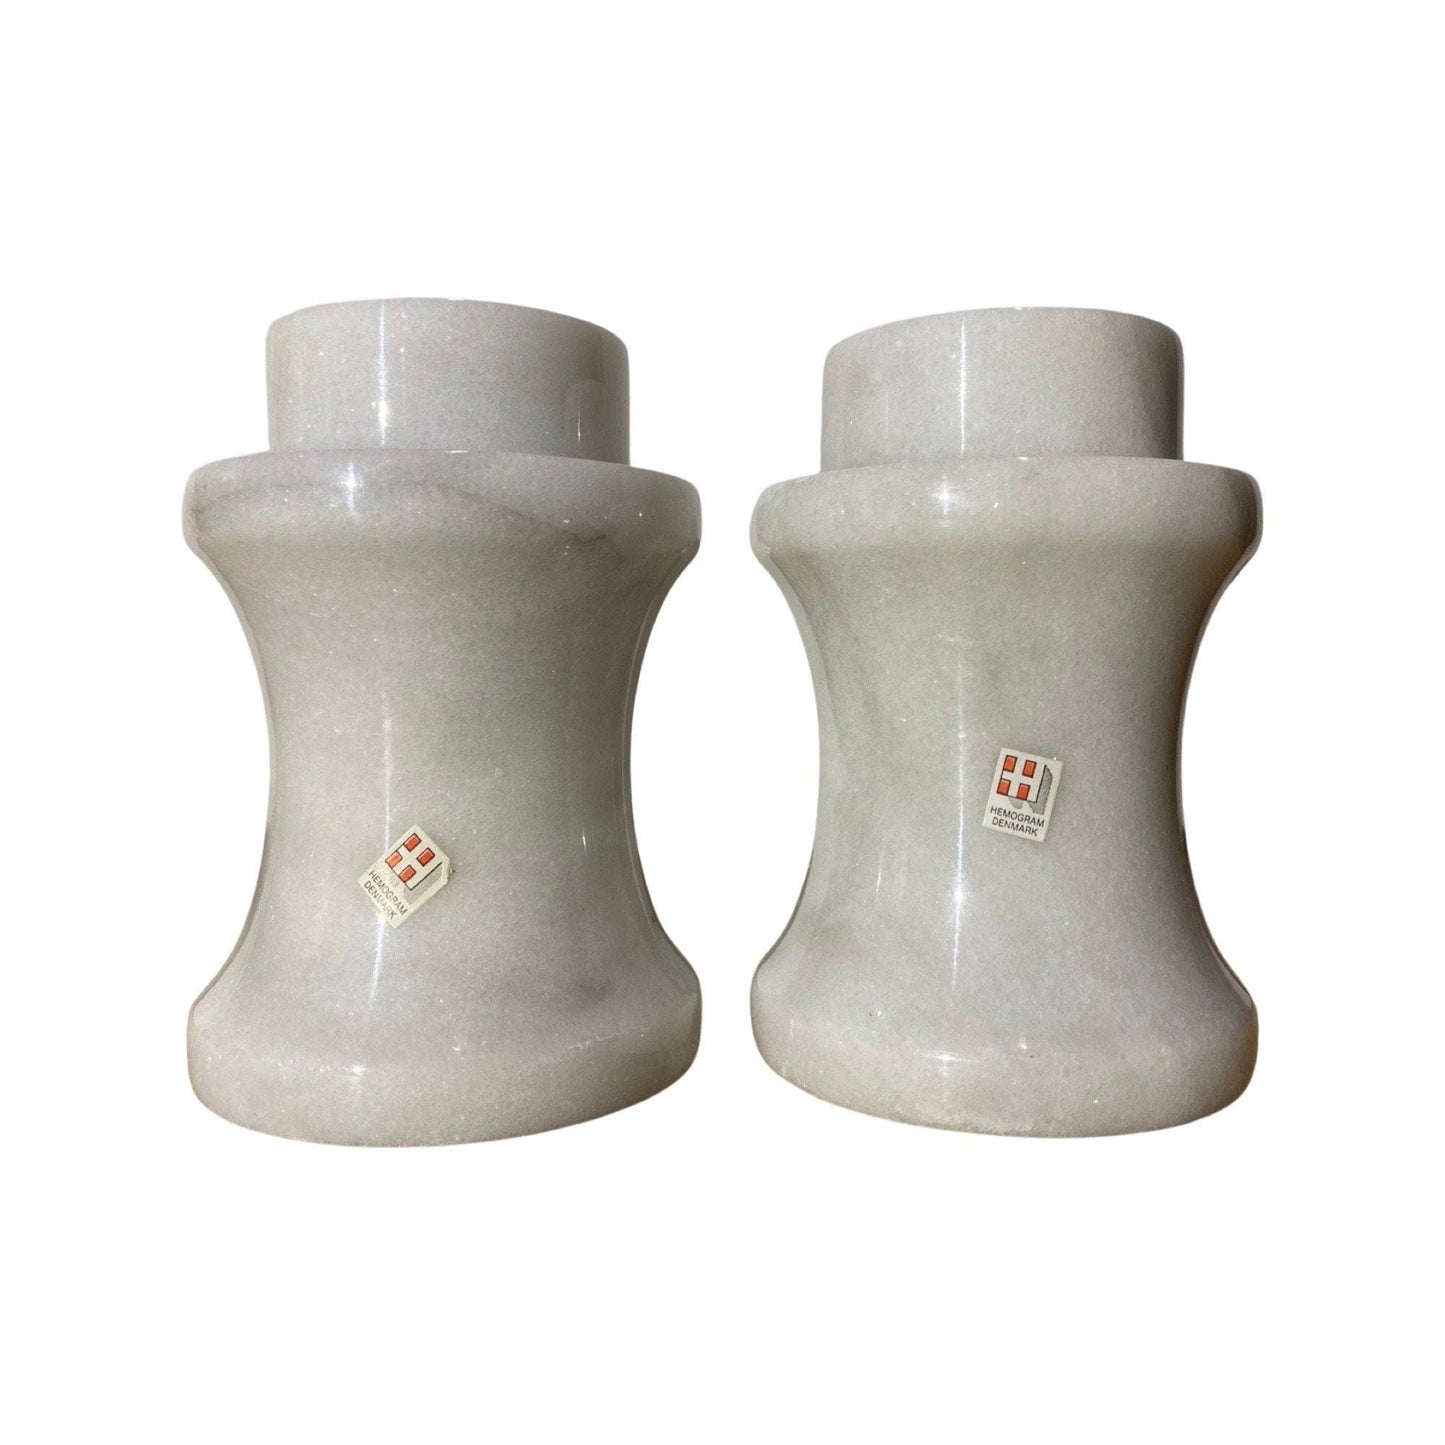 2 Vintage HEMOGRAM Denmark Marble Candlestick Holders | Set of 2 Candle Stick Holders | Candlesticks and Big Candles SMOOTH Marble Pattern - FancyVintage.nl -